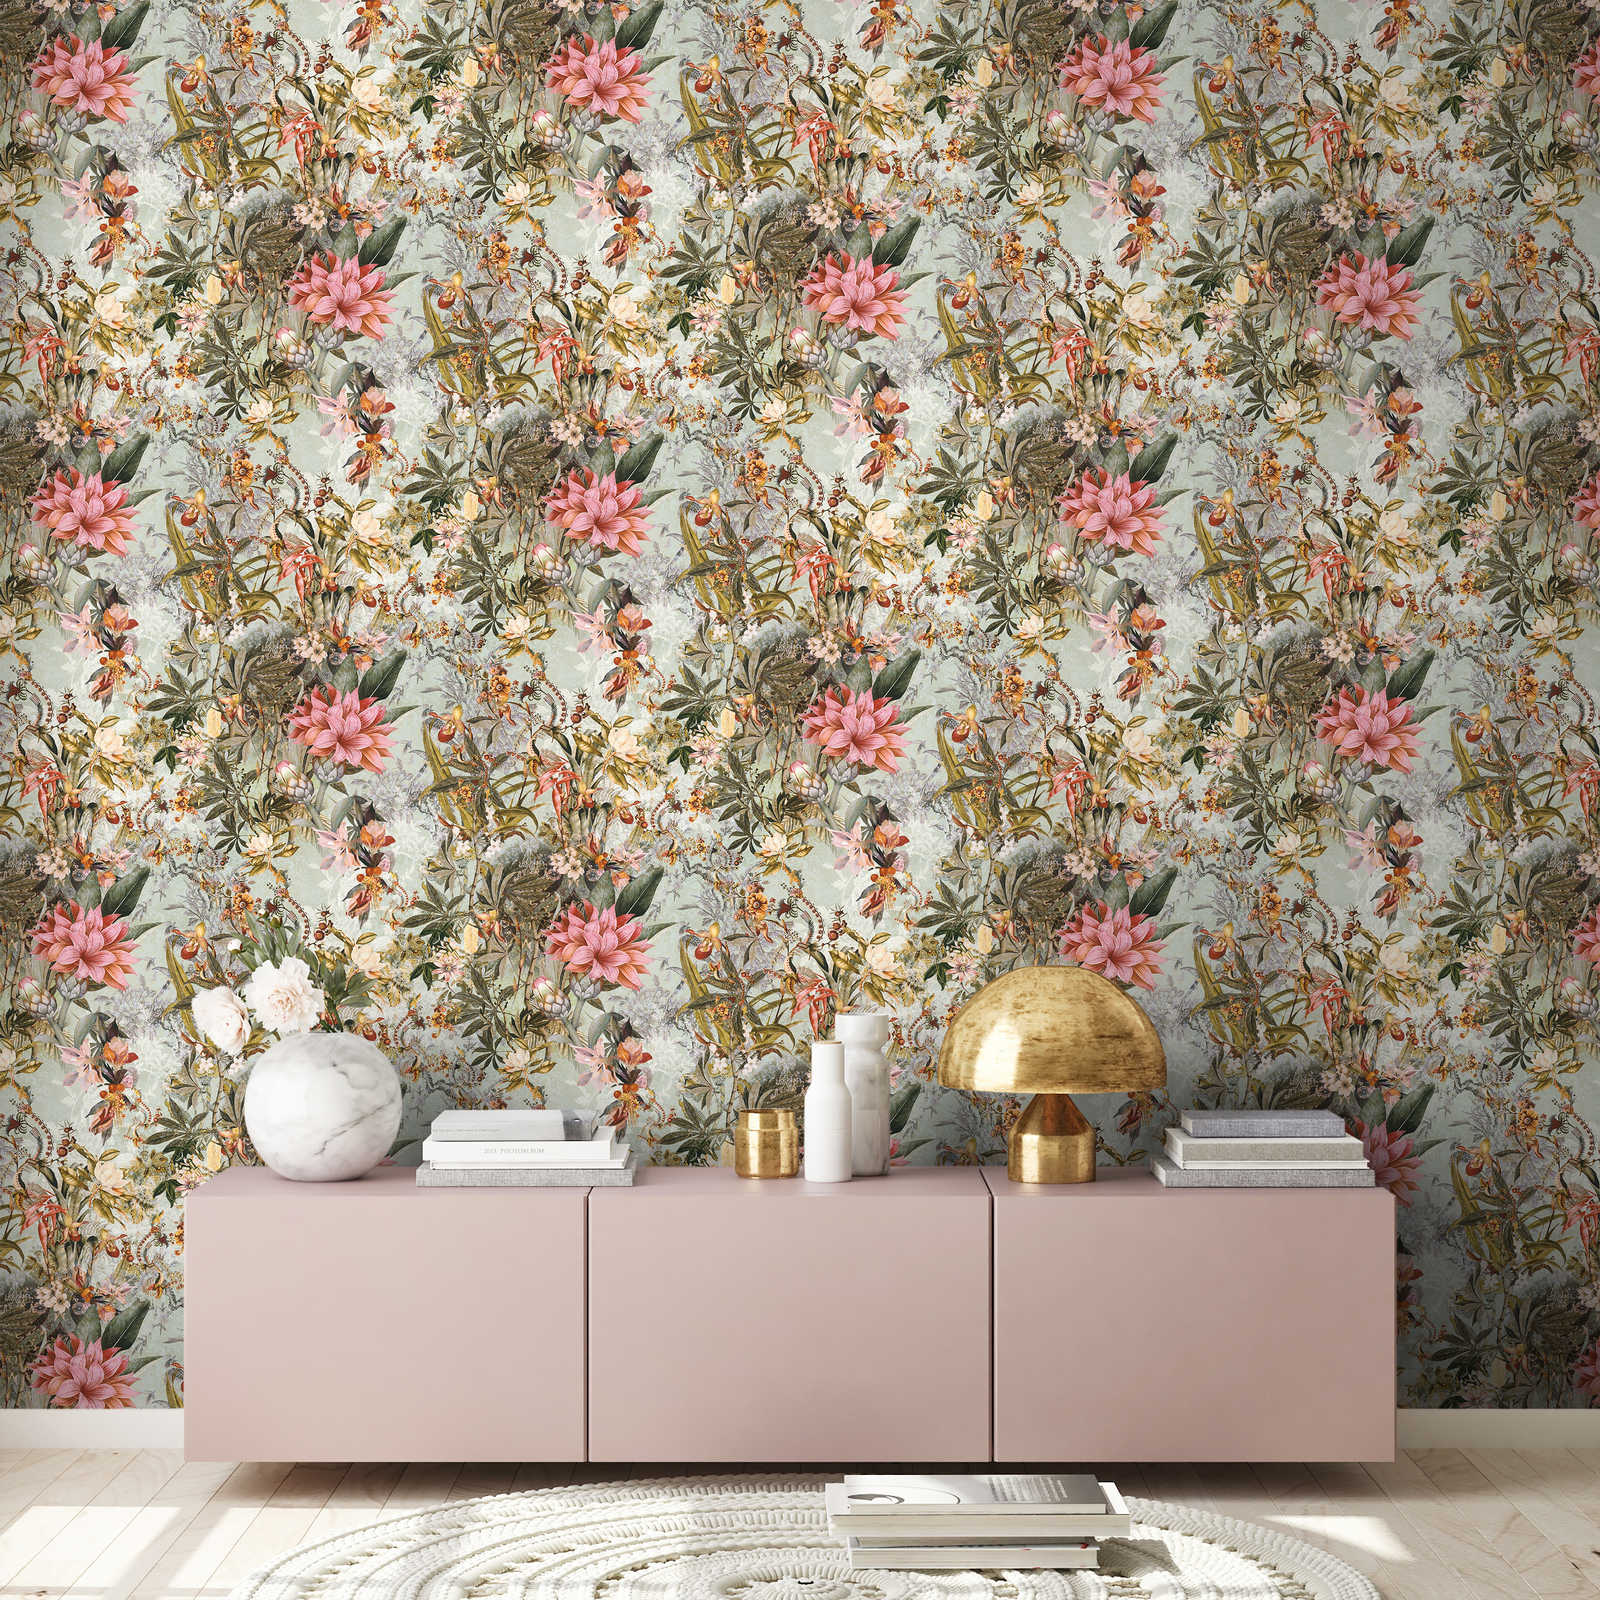             Non-woven wallpaper vintage jungle pattern - green, pink
        